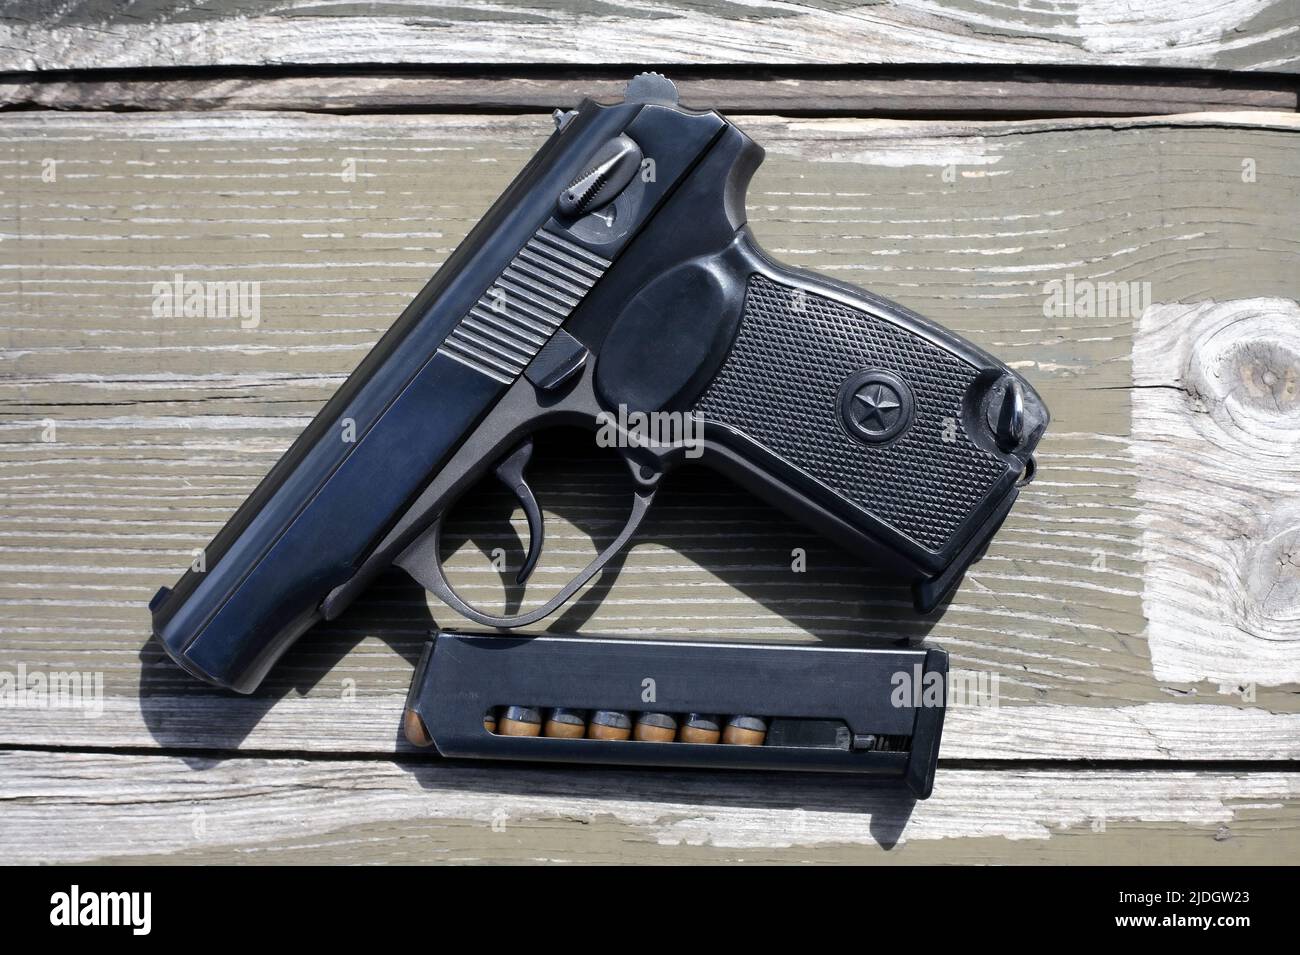 Eight-capacity magazine near handgun on wooden background Stock Photo